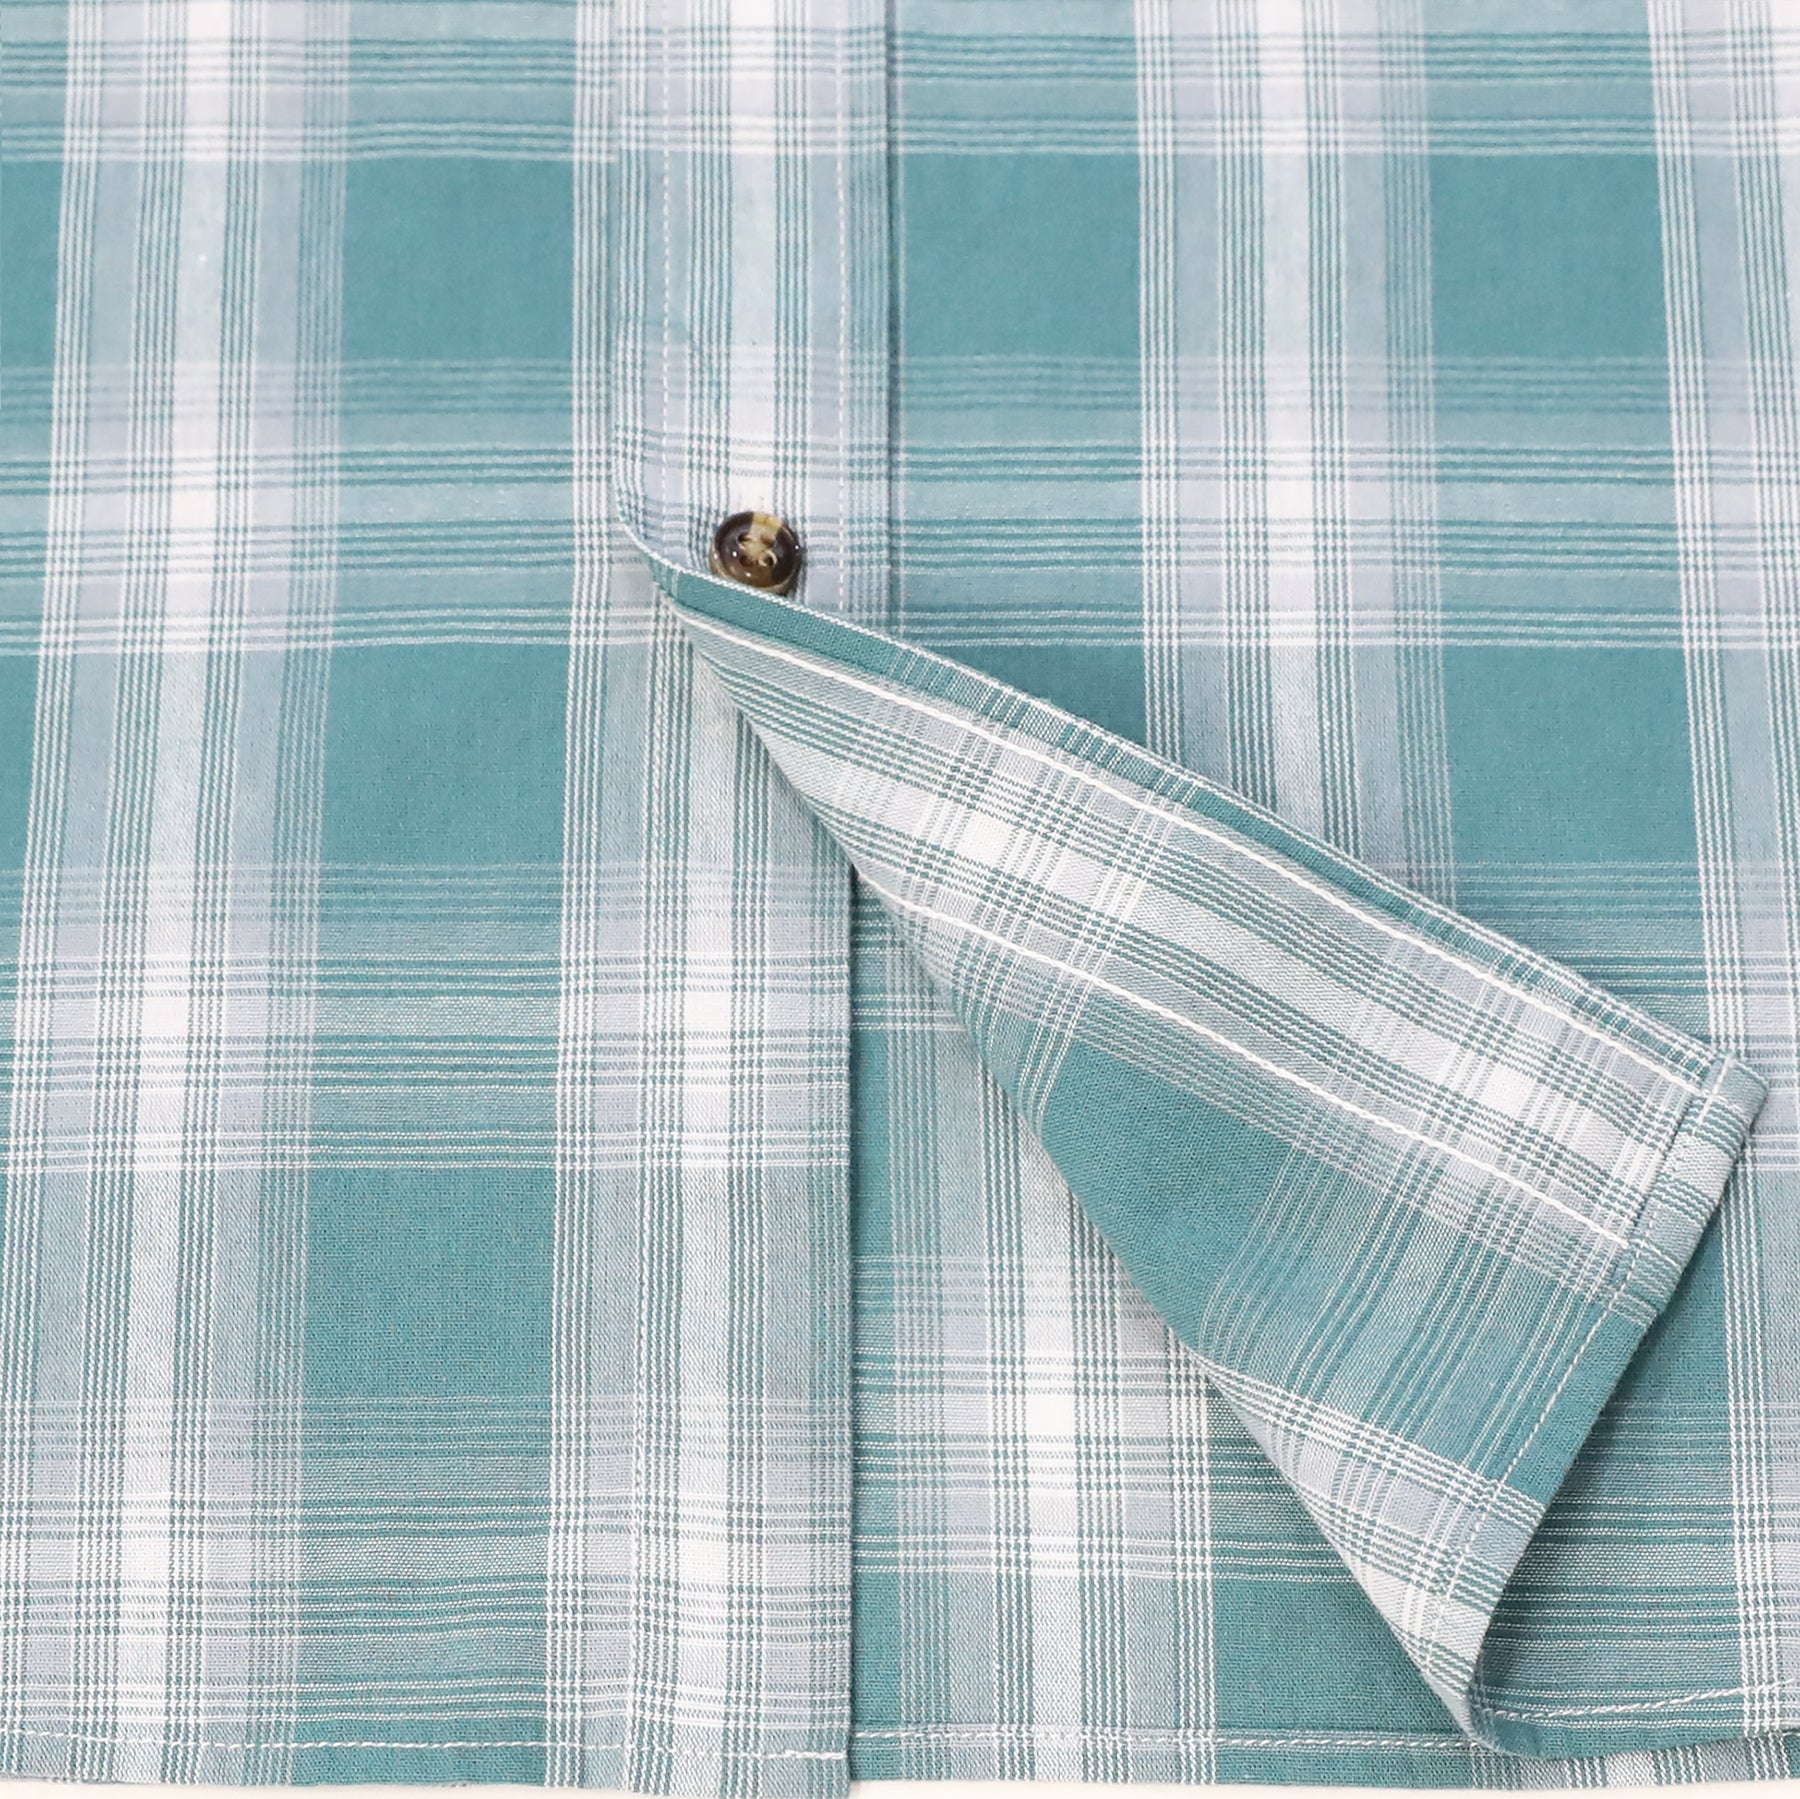 Men's casual short-sleeved cotton shirt #0016